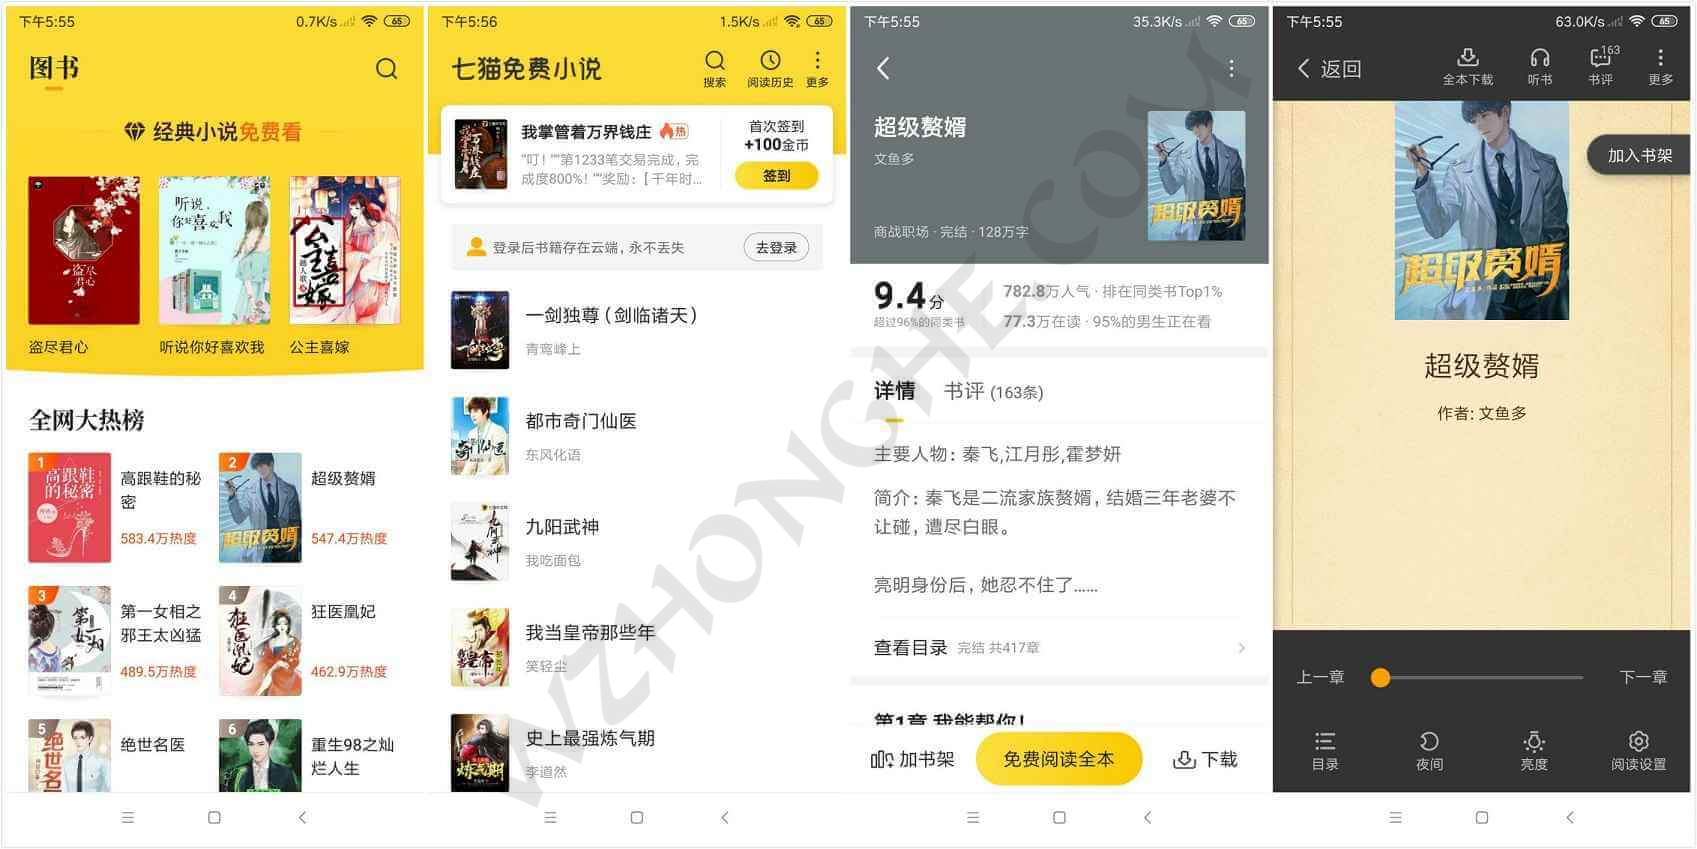 Android 七猫免费小说 - 无中和wzhonghe.com